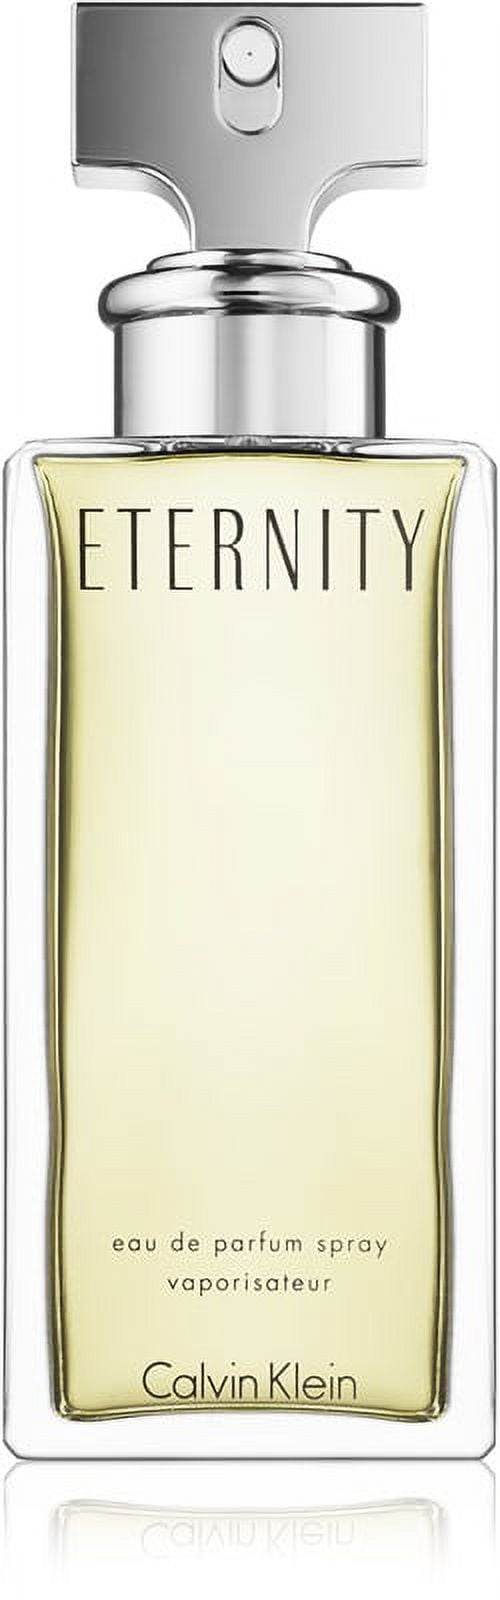 Calvin Klein Eternity Eau De Parfum Spray, Perfume for Women, 3.4